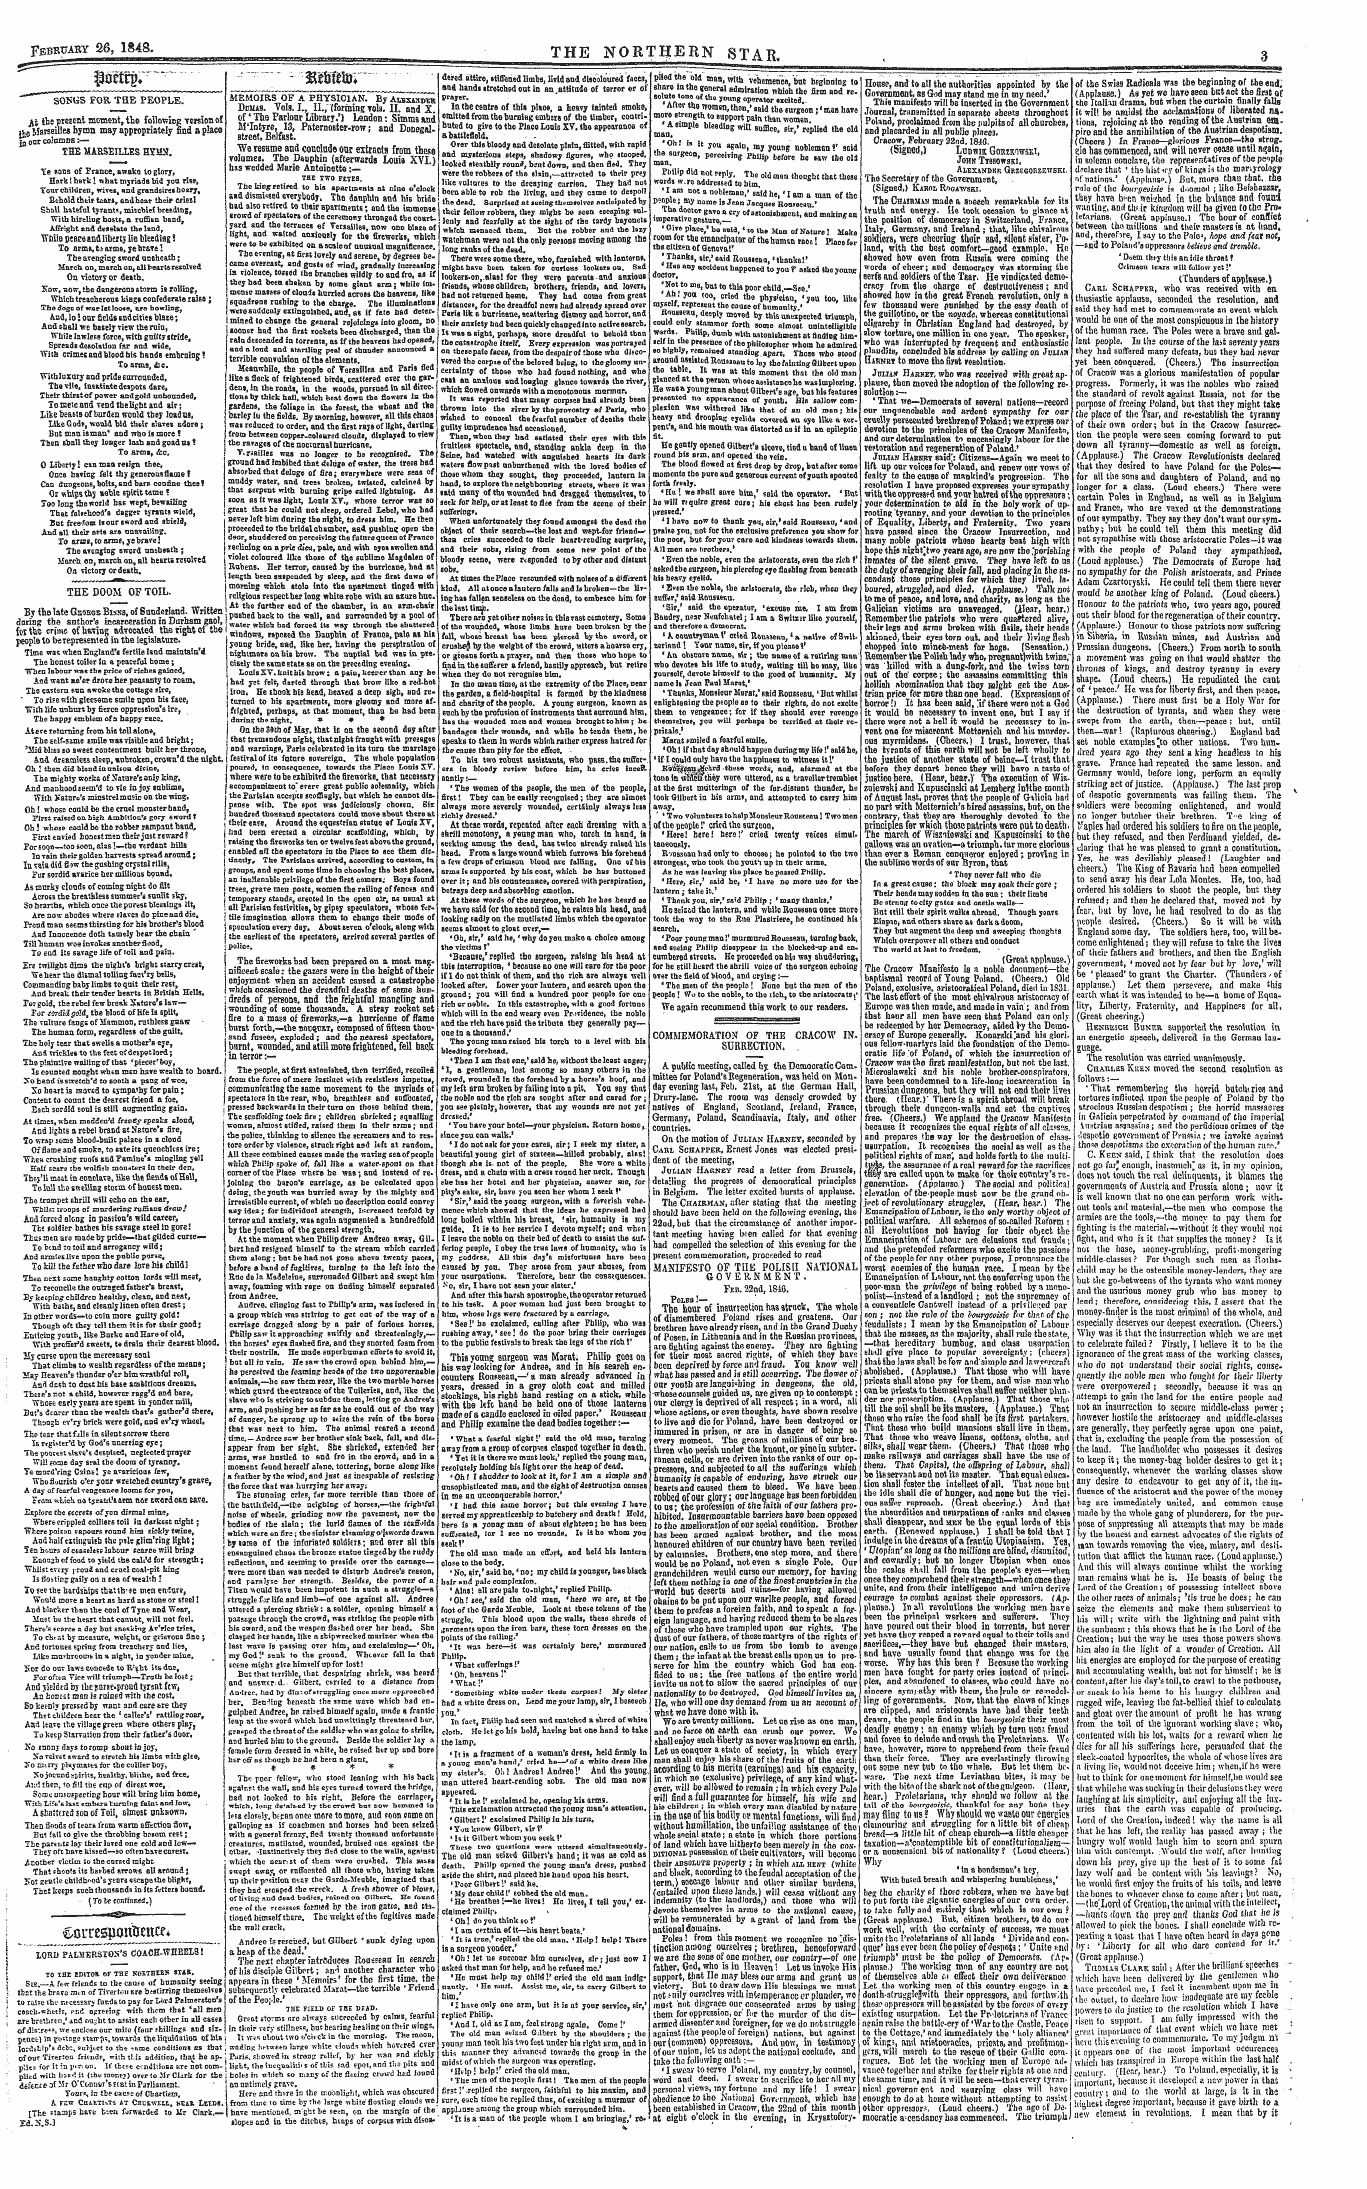 Northern Star (1837-1852): jS F Y, 3rd edition - ^Curespottimtfe